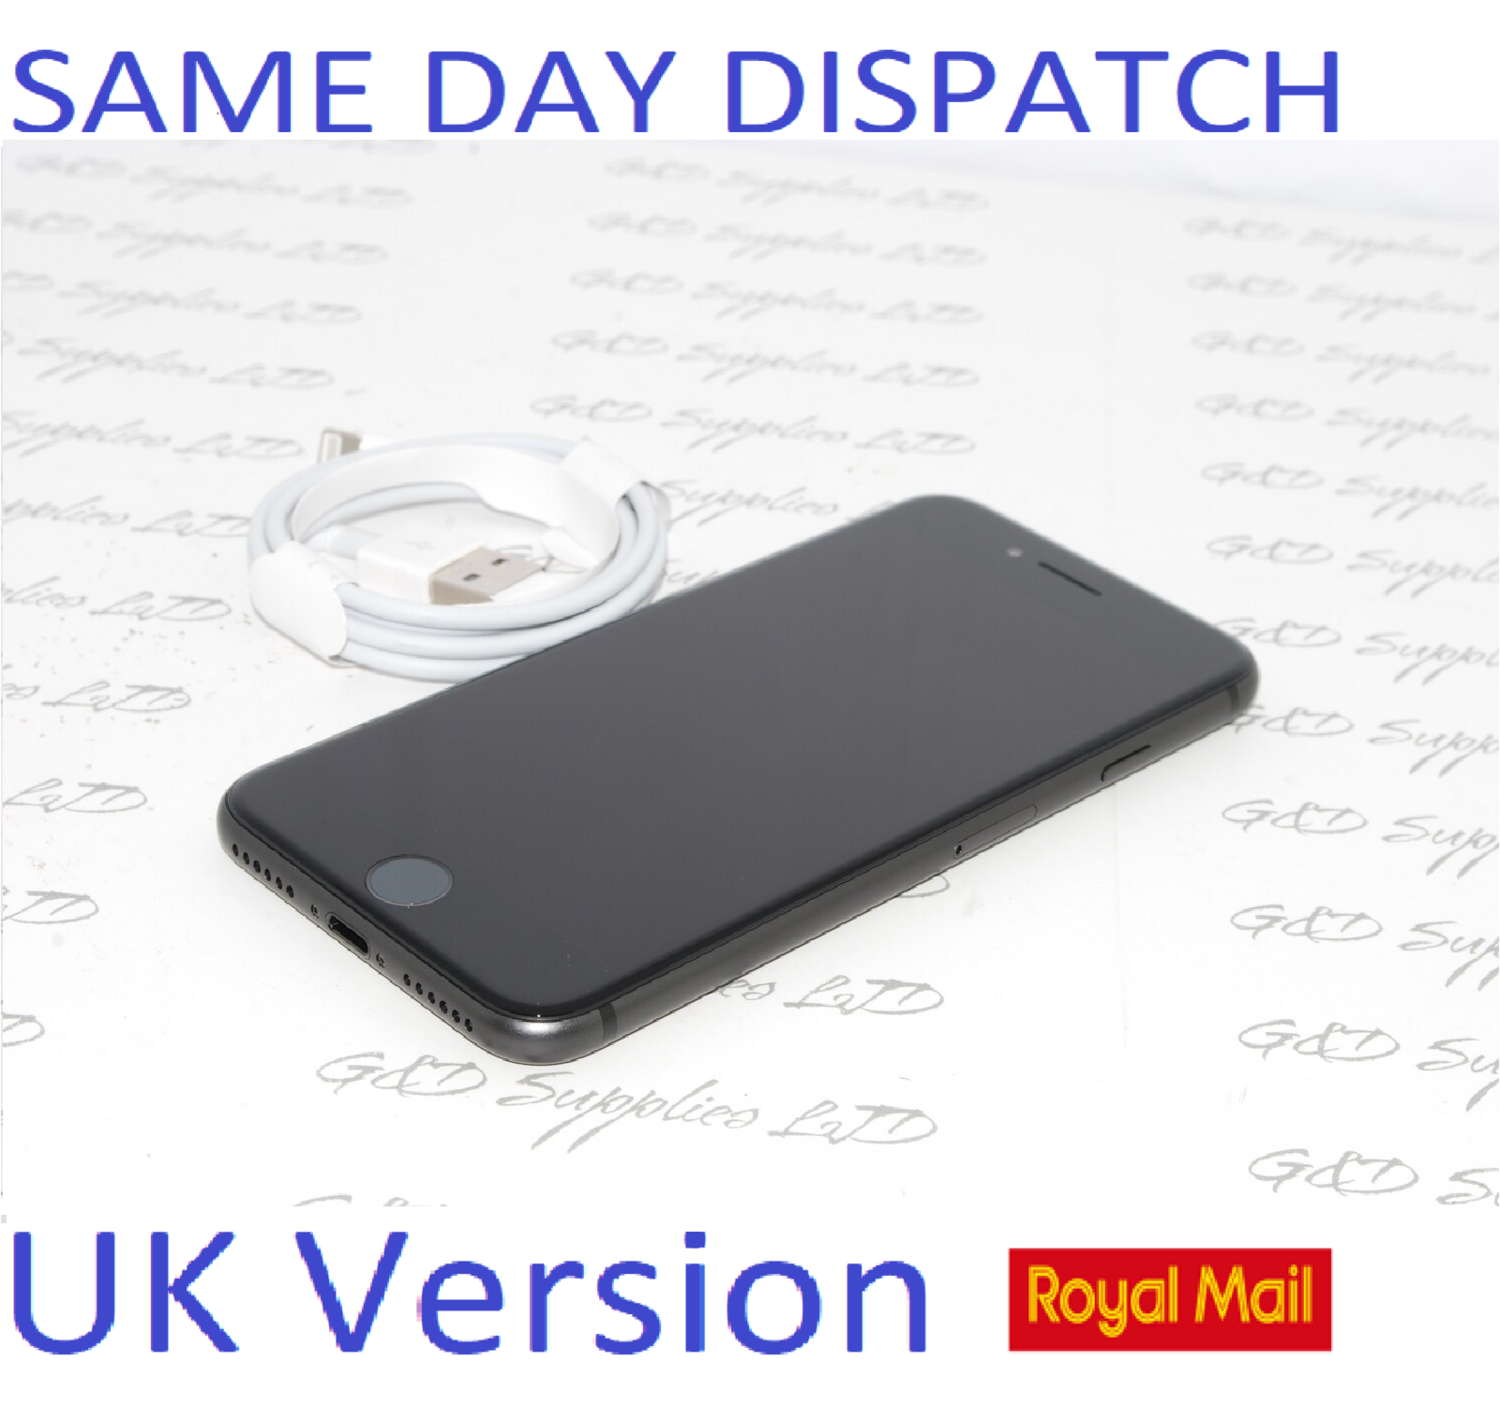 # Apple iPhone 8 4G 64GB Black Unlocked SIM Free UK Version mint condition  NO BOX